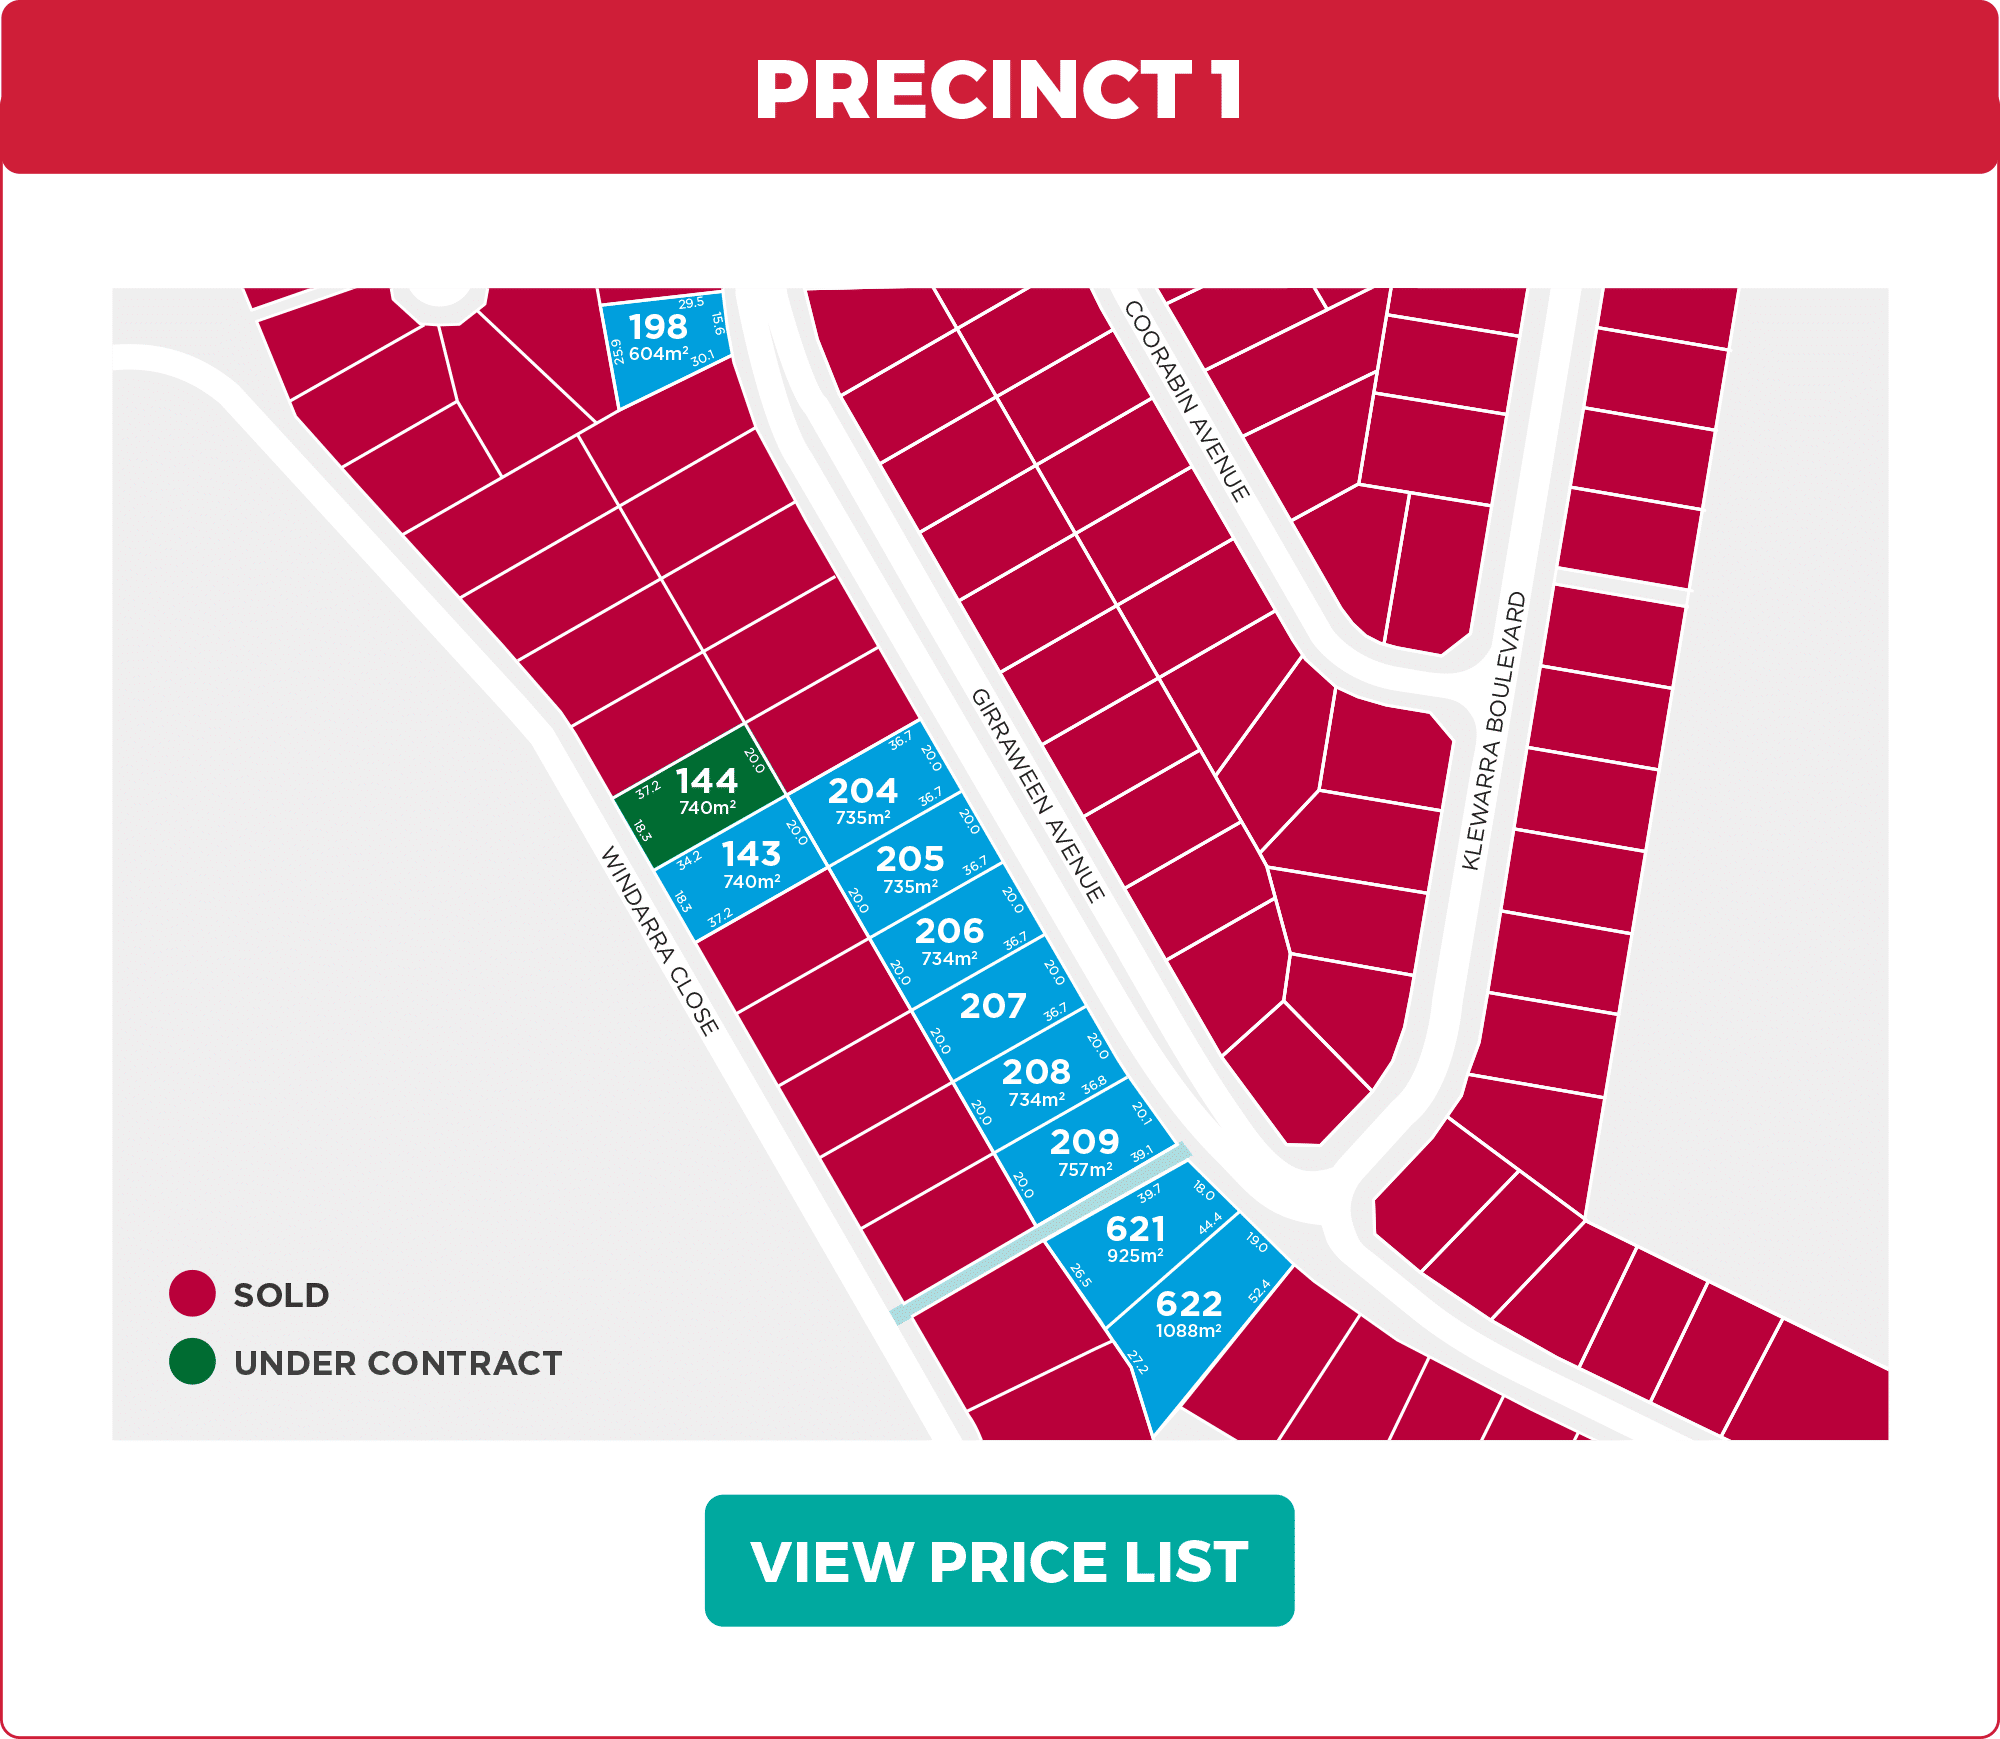 Precinct 1: View Price List